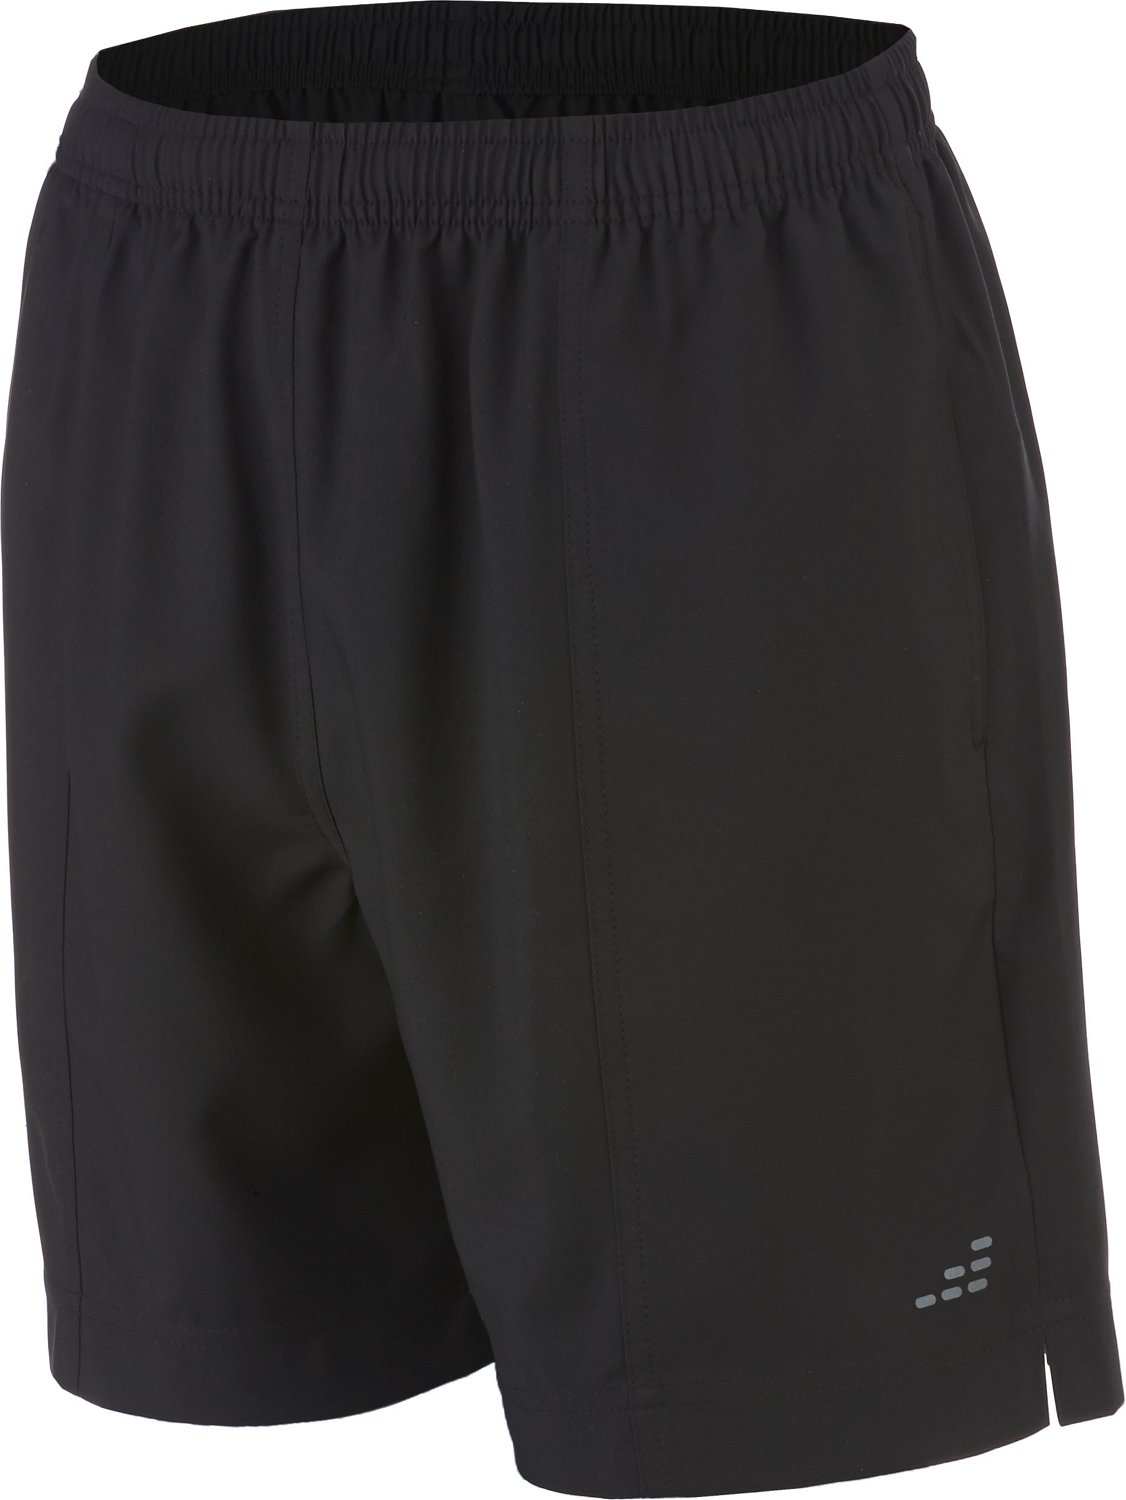 Men's Shorts | Men's Workout Shorts, Men's Athletic Shorts | Academy